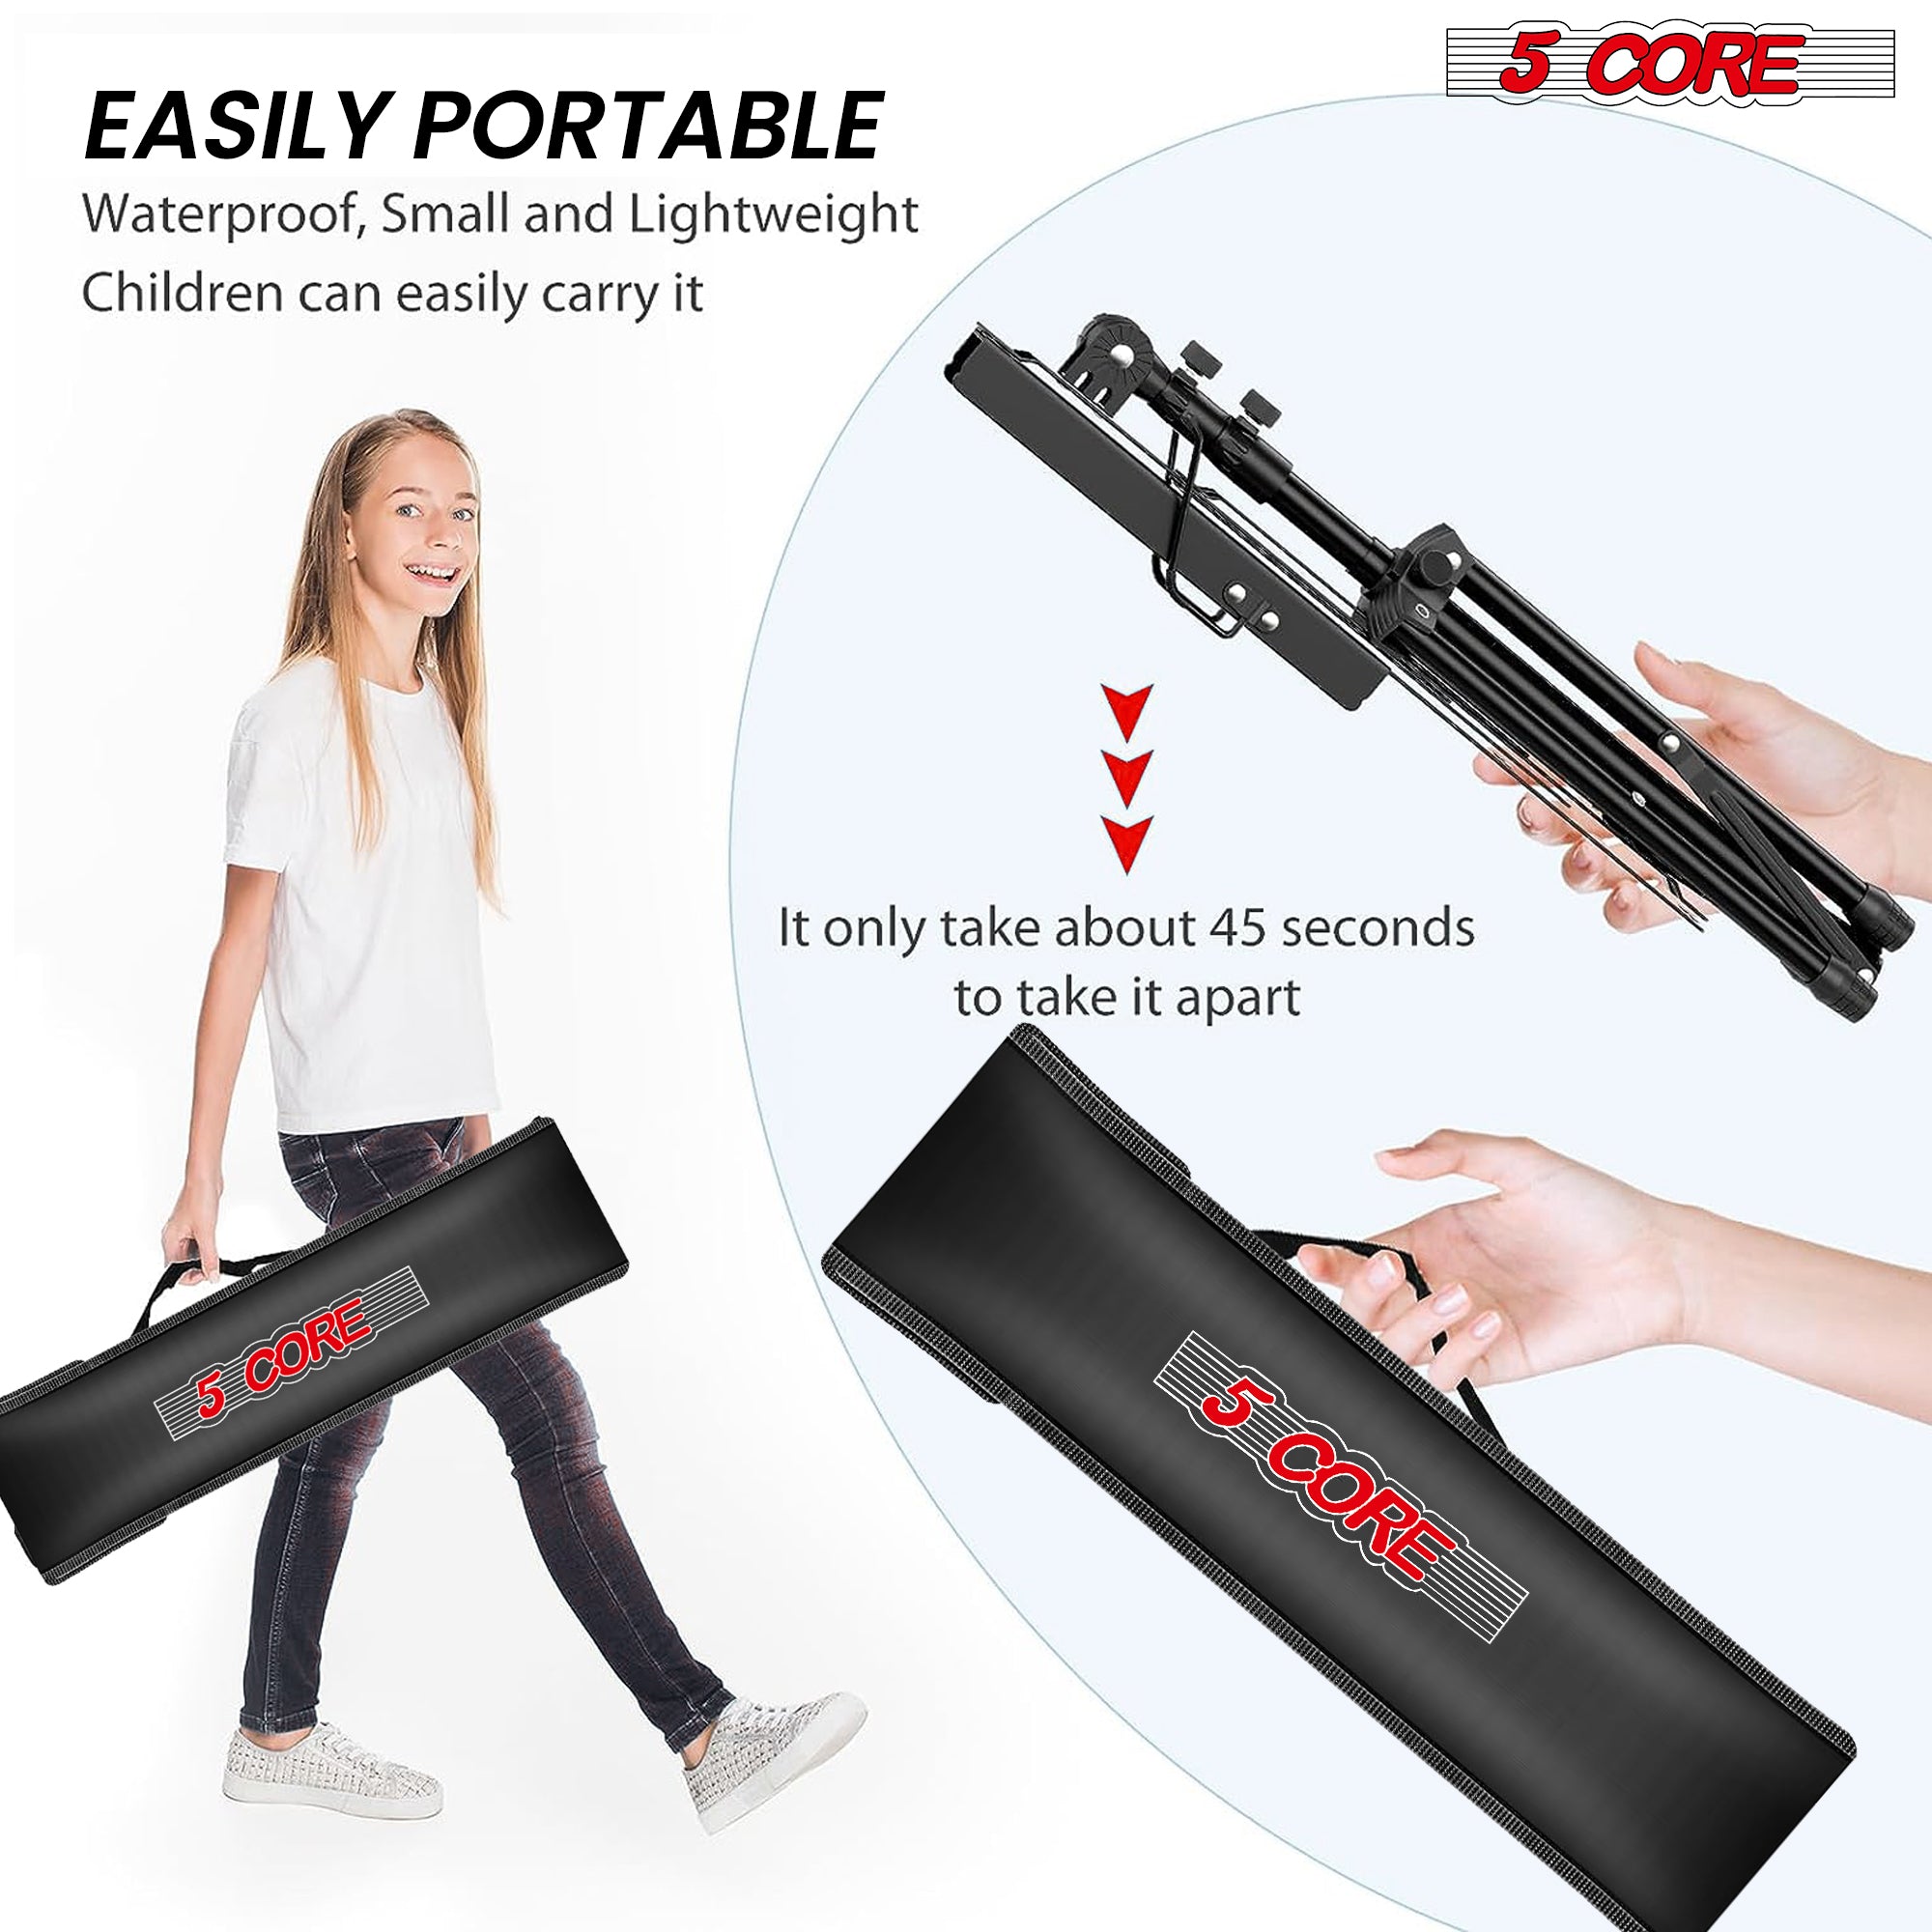 easily portable